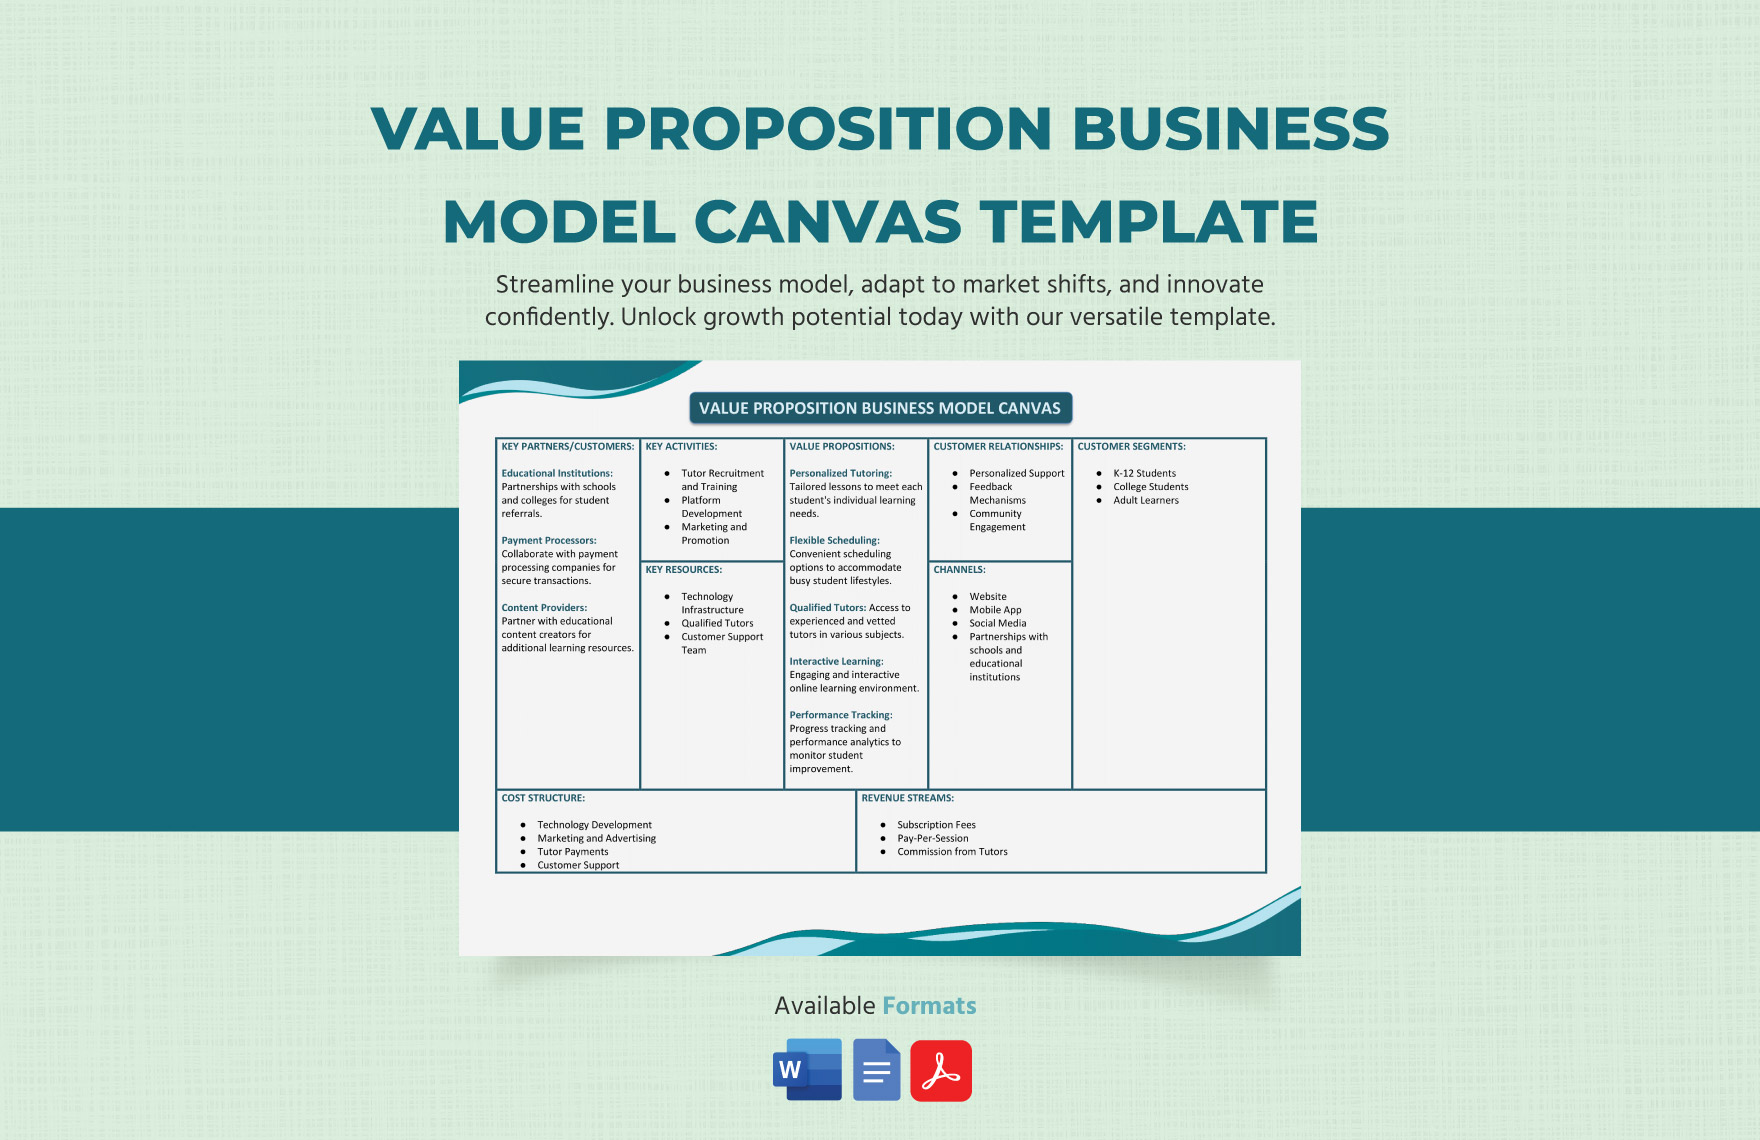 Value Proposition Business Model Canvas Template